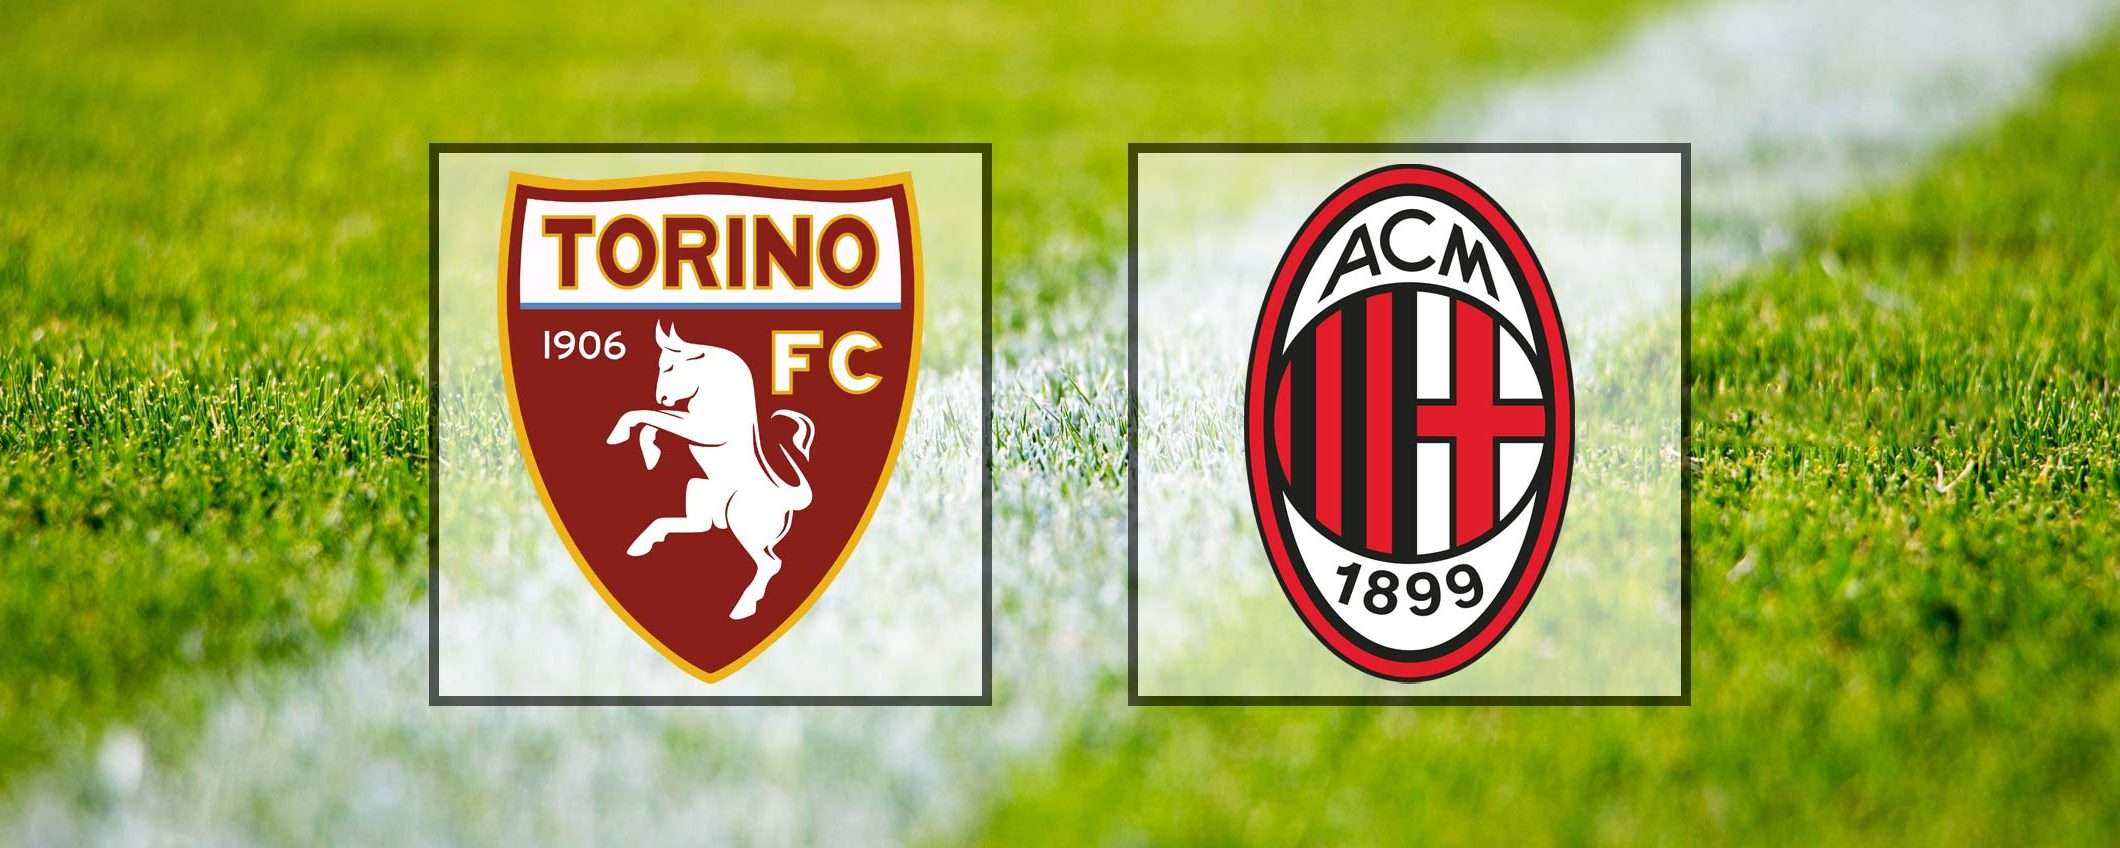 Come vedere Torino-Milan in streaming (Serie A)